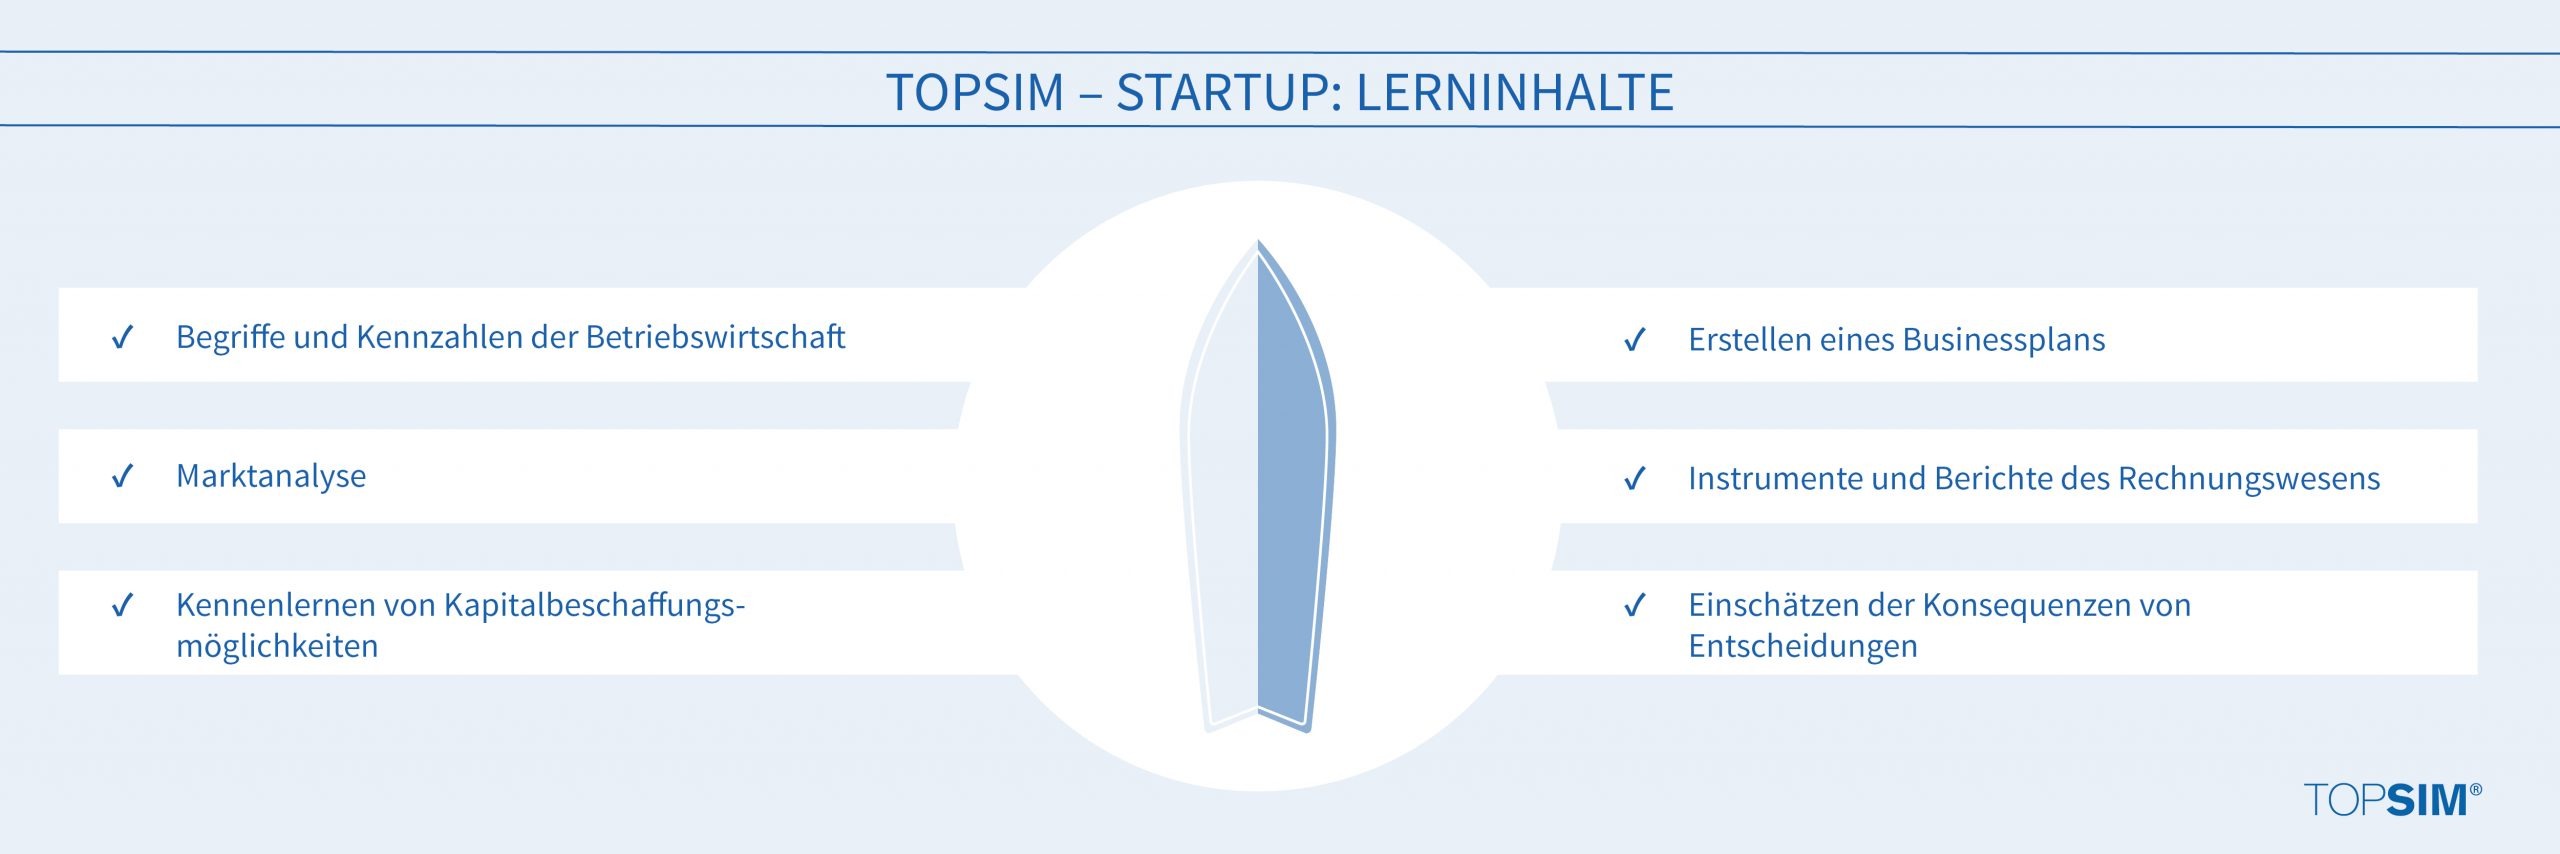 TOPSIM – Startup: Lerninhalte